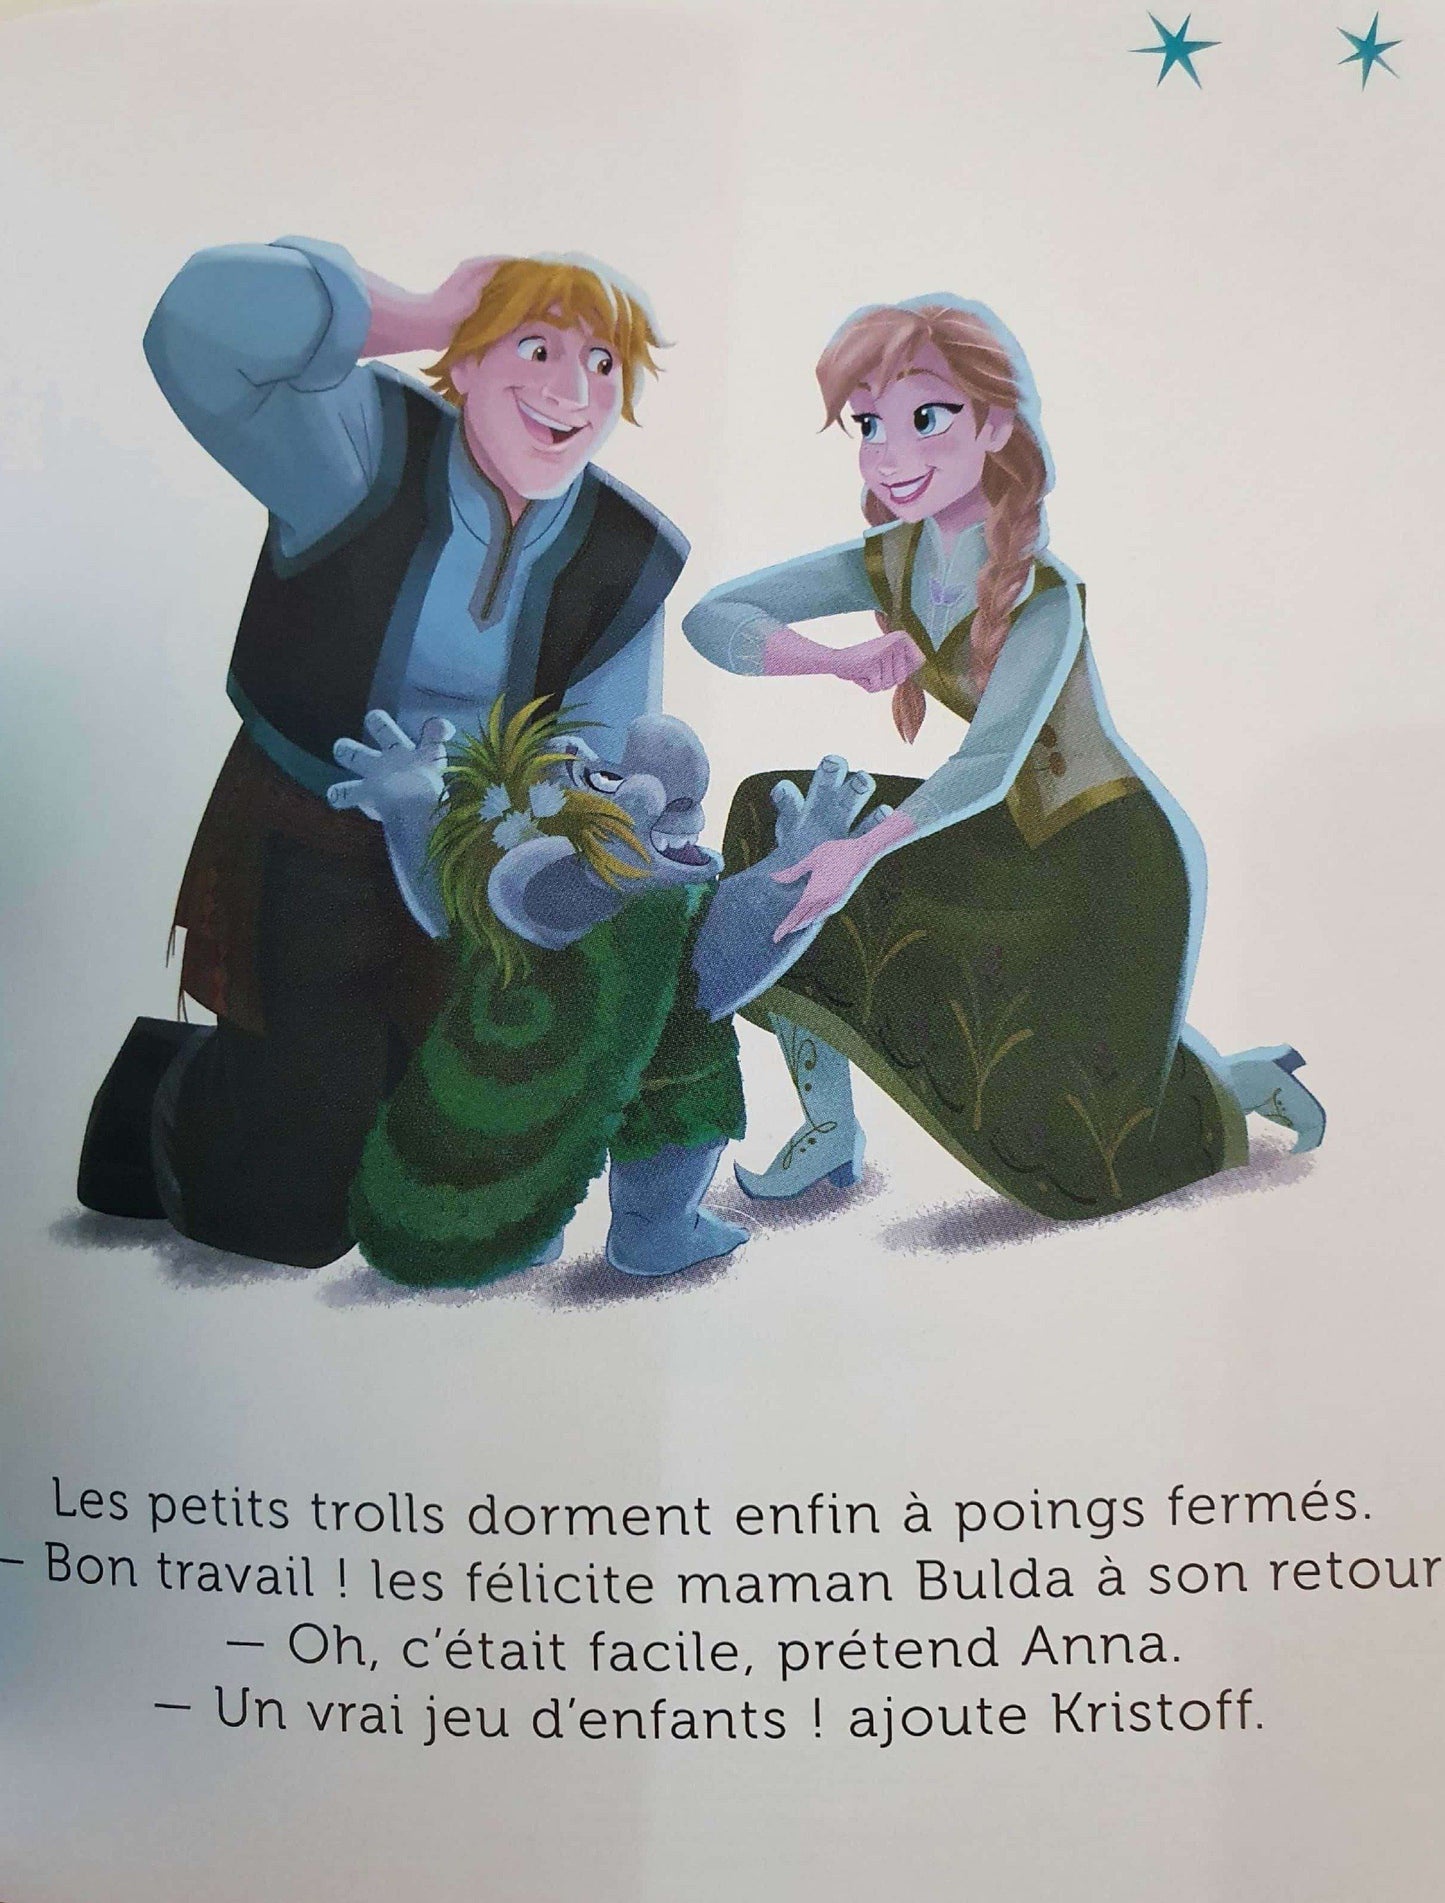 LA REINE DES NEIGES - Babysitting chez les trolls Like New Disney  (6075334295737)